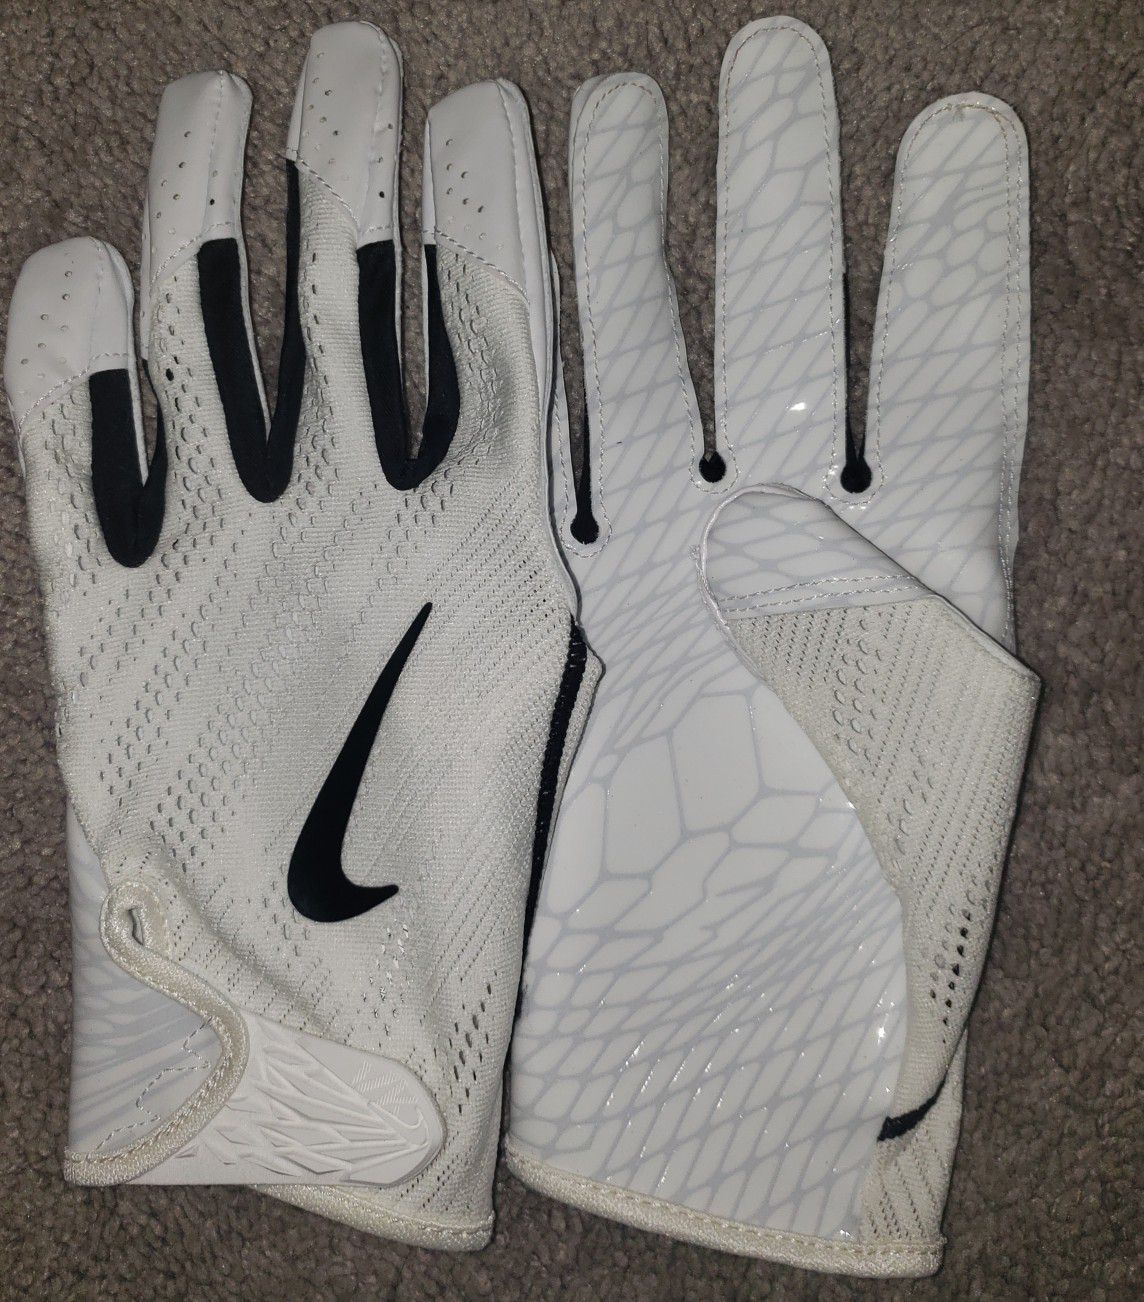 BRAND NEW Nike Vapor Knit 2.0 wide reciever gloves